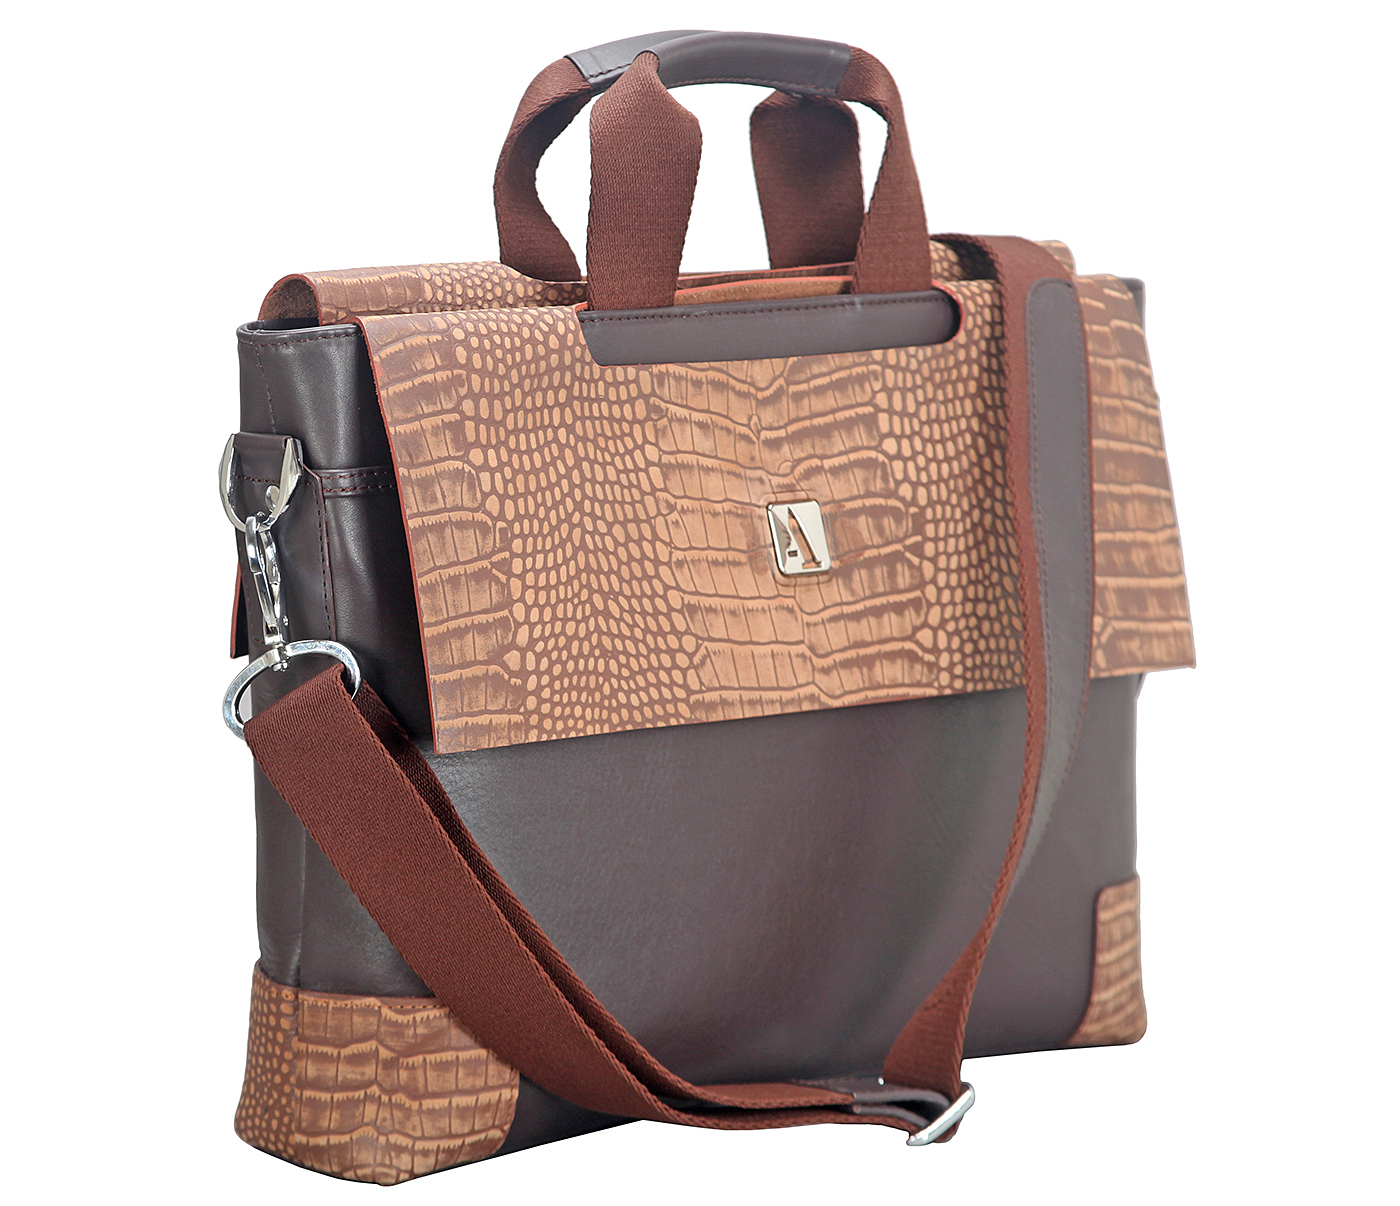 Portfolio / Laptop Bag-Ebner-Laptop, portfolio office executive bag in Genuine Leather - Brown / Tan